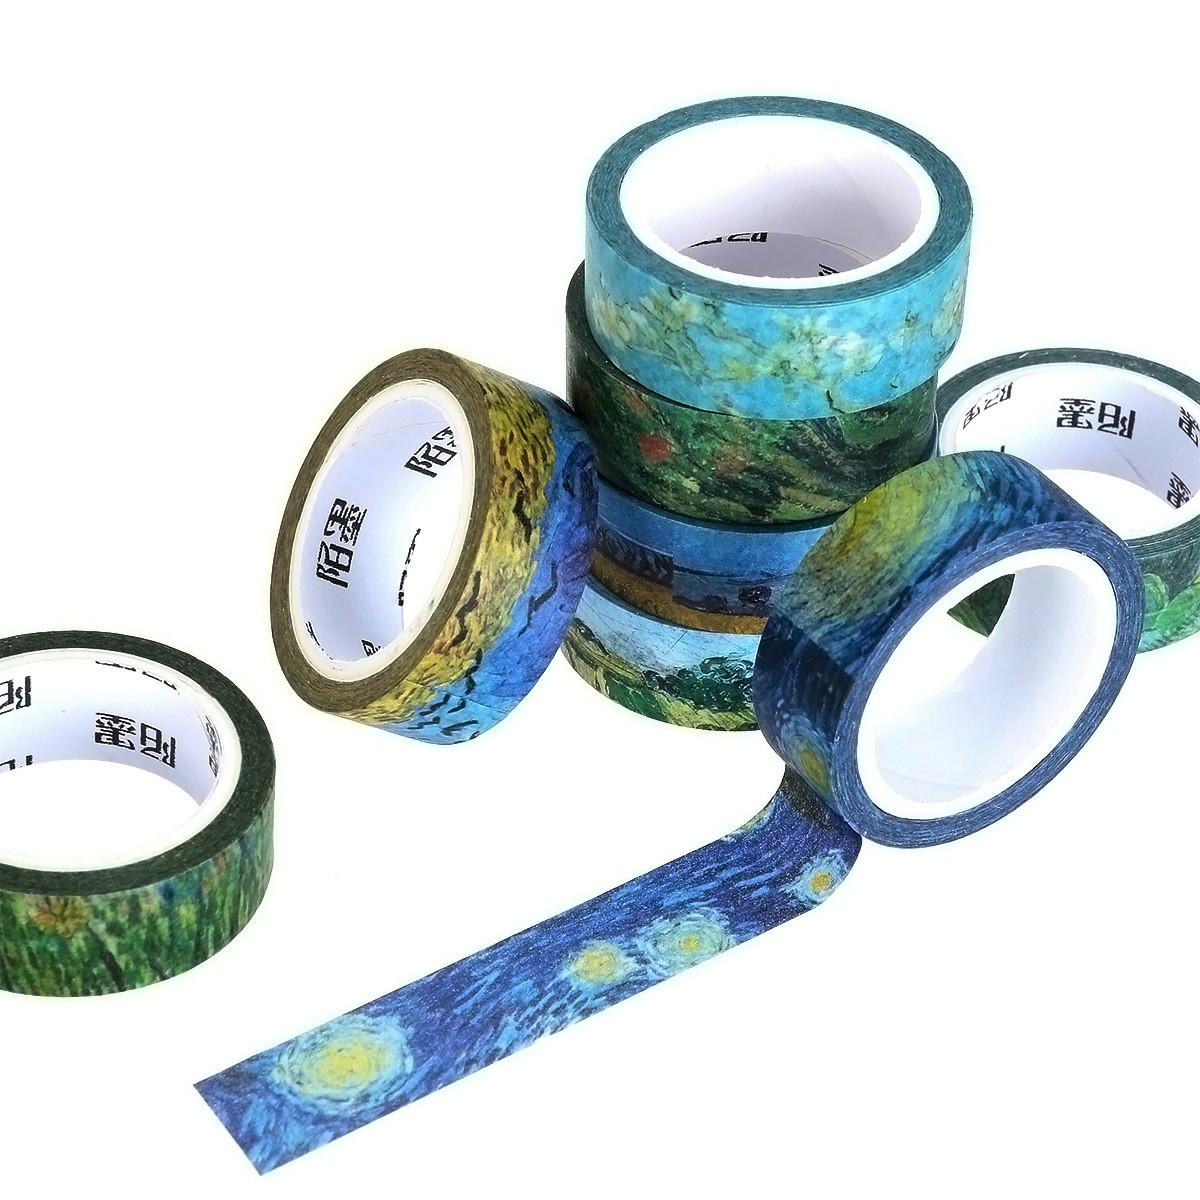 8pcs Washi Tapes Van Gogh Painting Paper Masking Tape Decorative Self Adhesive DIY Tapes Scrapbooking Stickers